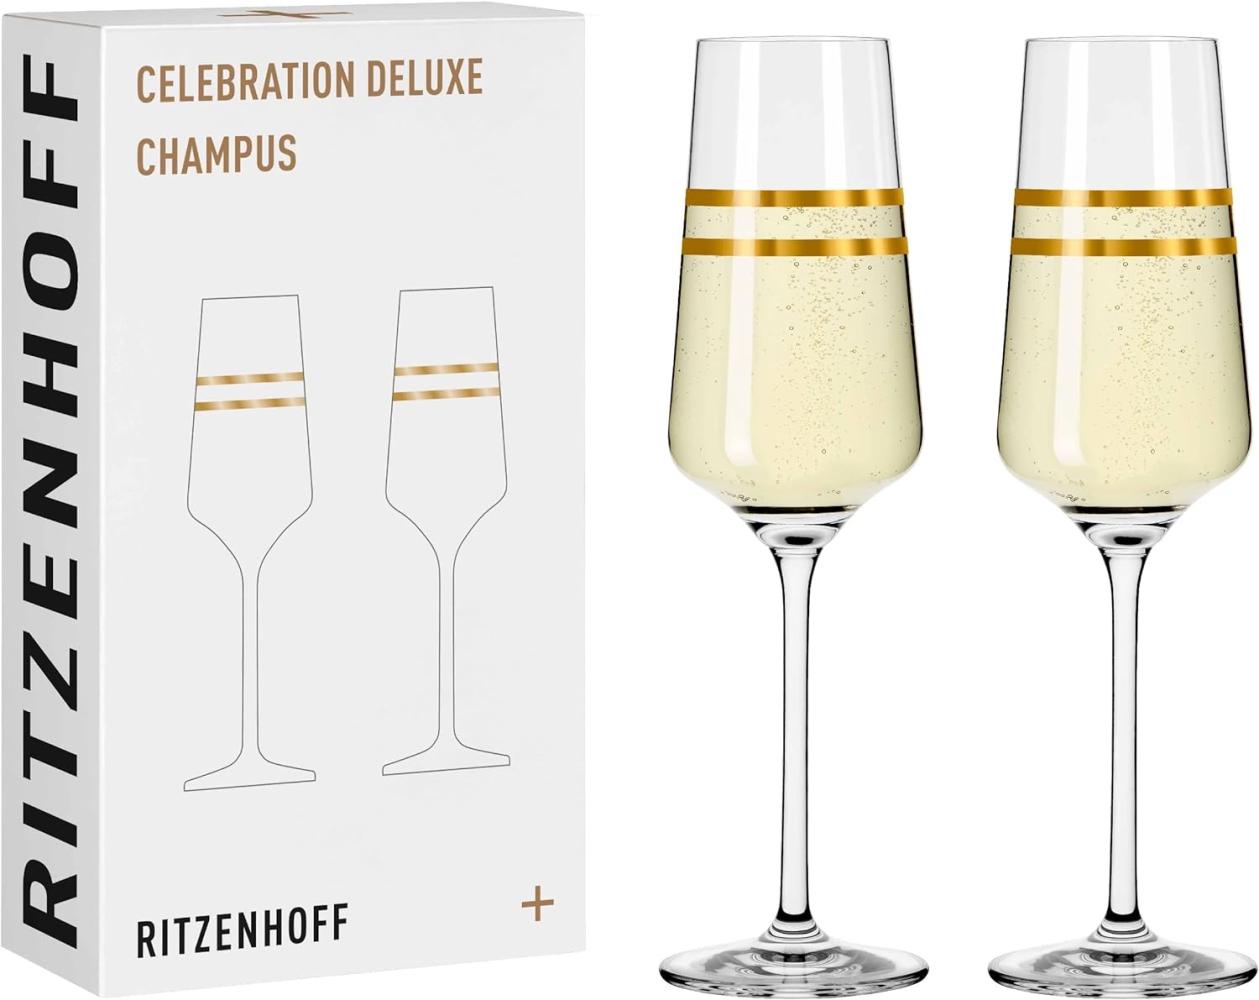 Ritzenhoff 6141004 Champagnerglas-Set #1 CELEBRATION DELUXE Sonja Eikler 2022 Bild 1